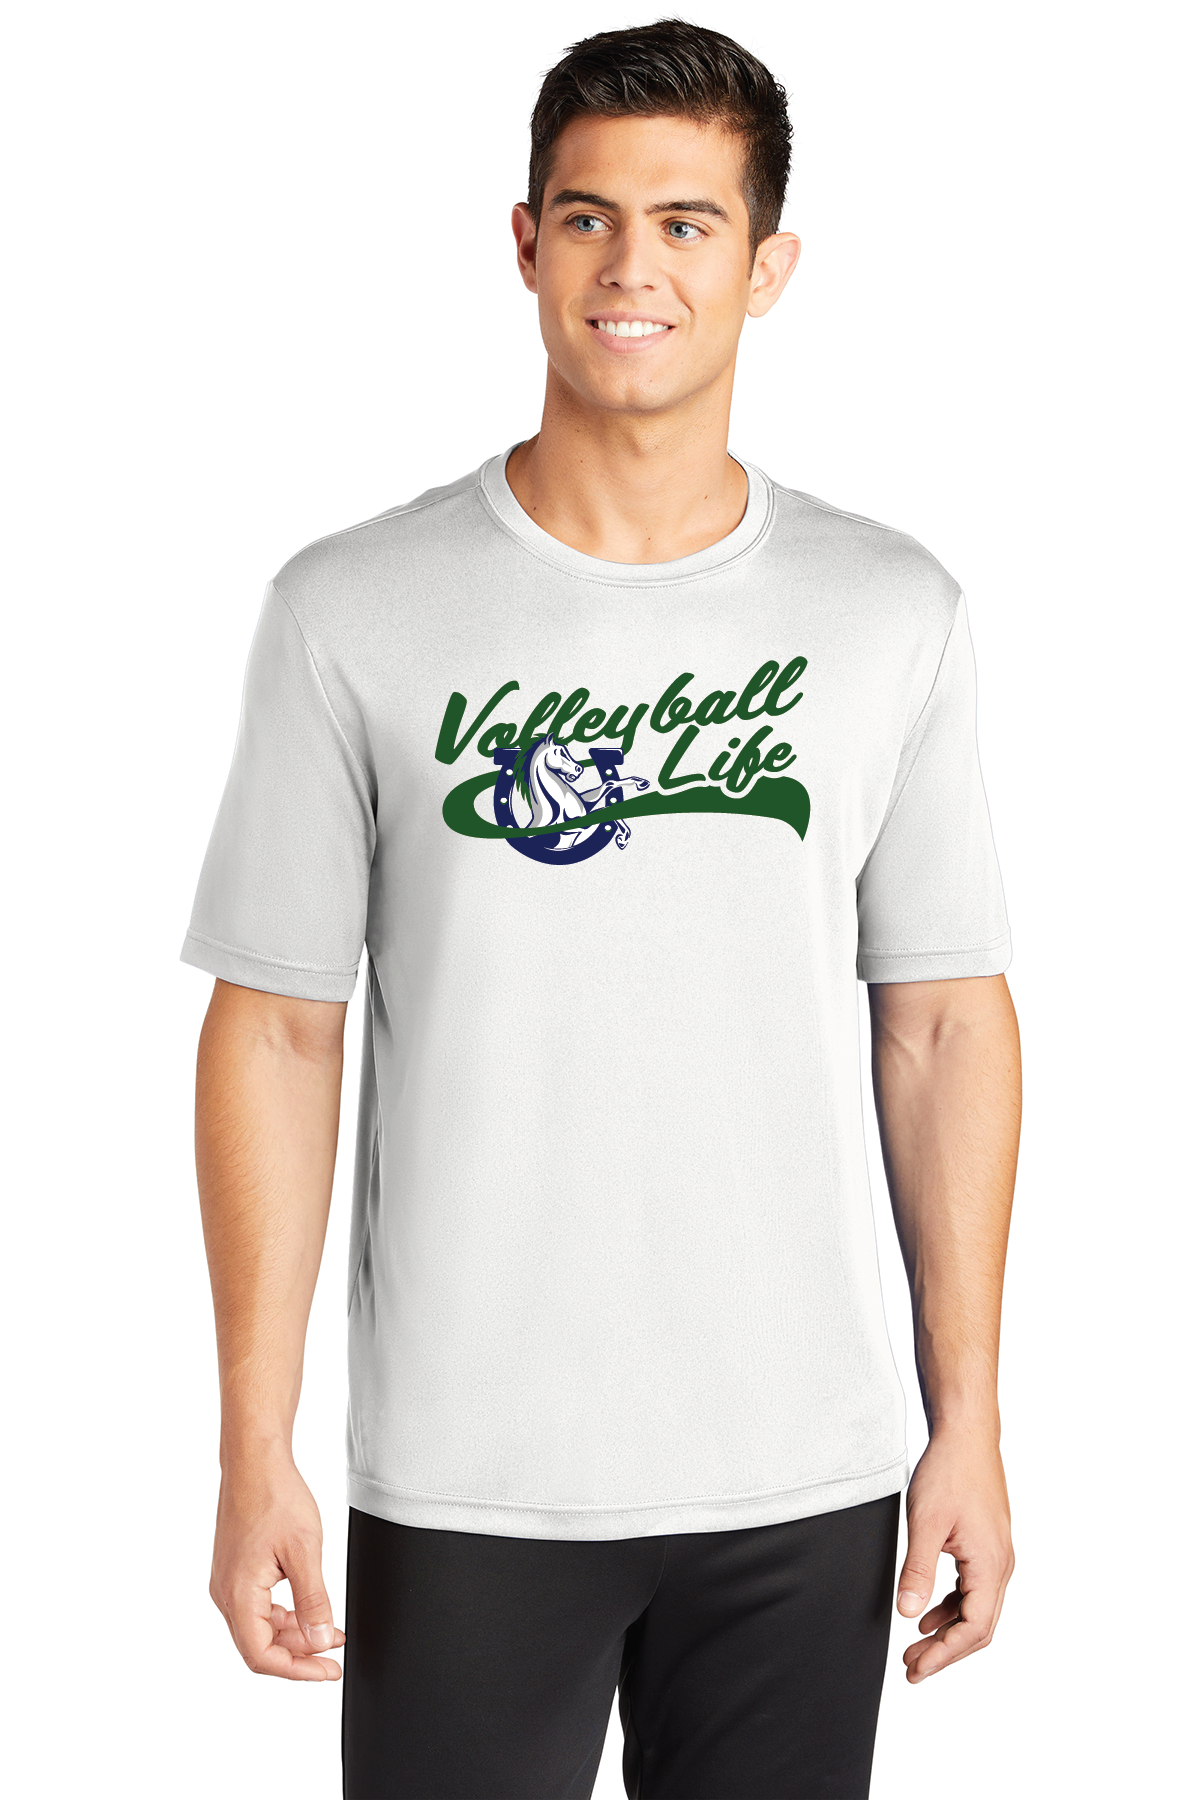 McNeil Volleyball Life T-Shirt